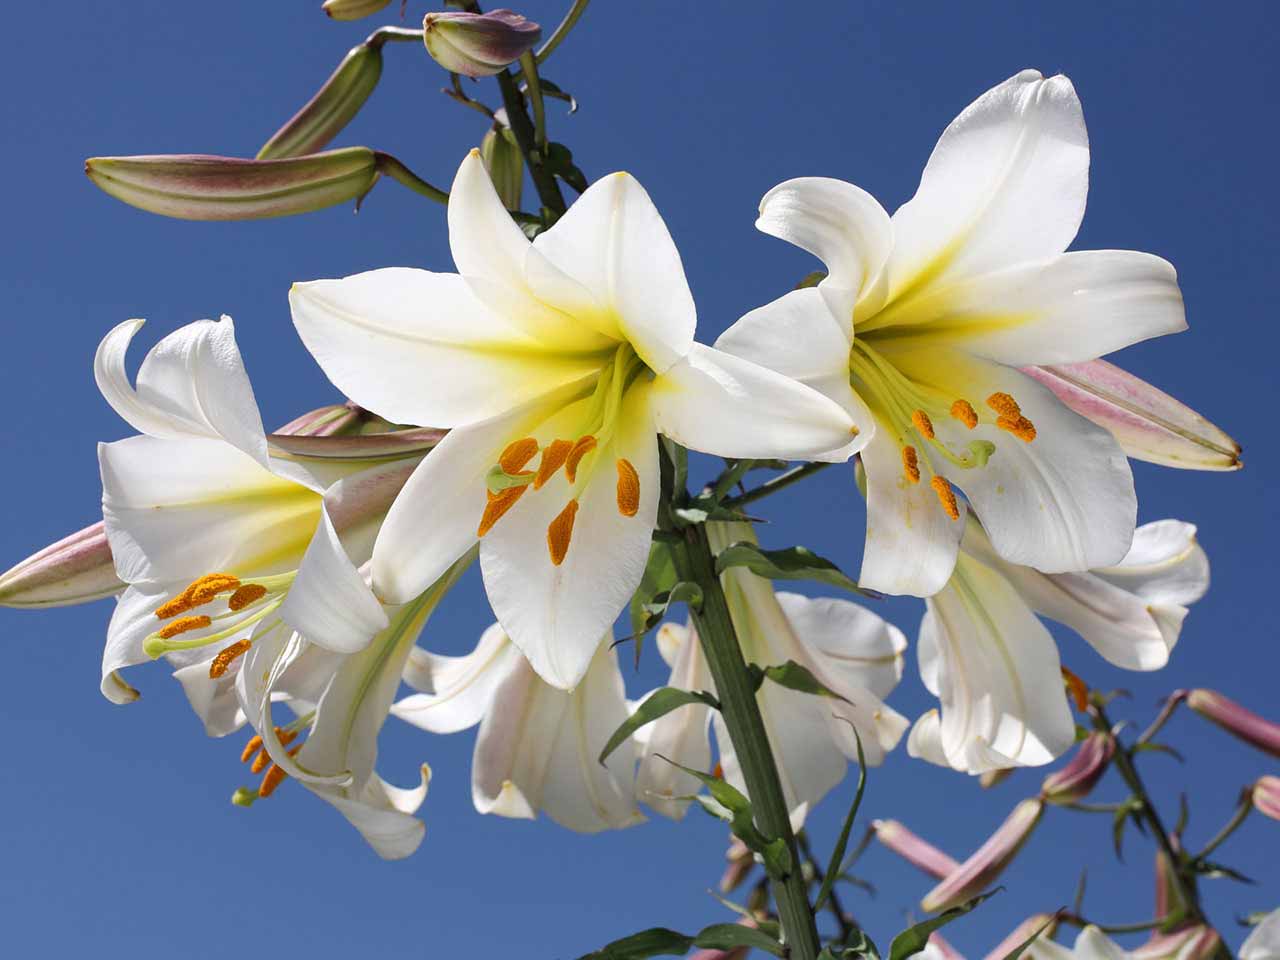 White lilies against a blue sky